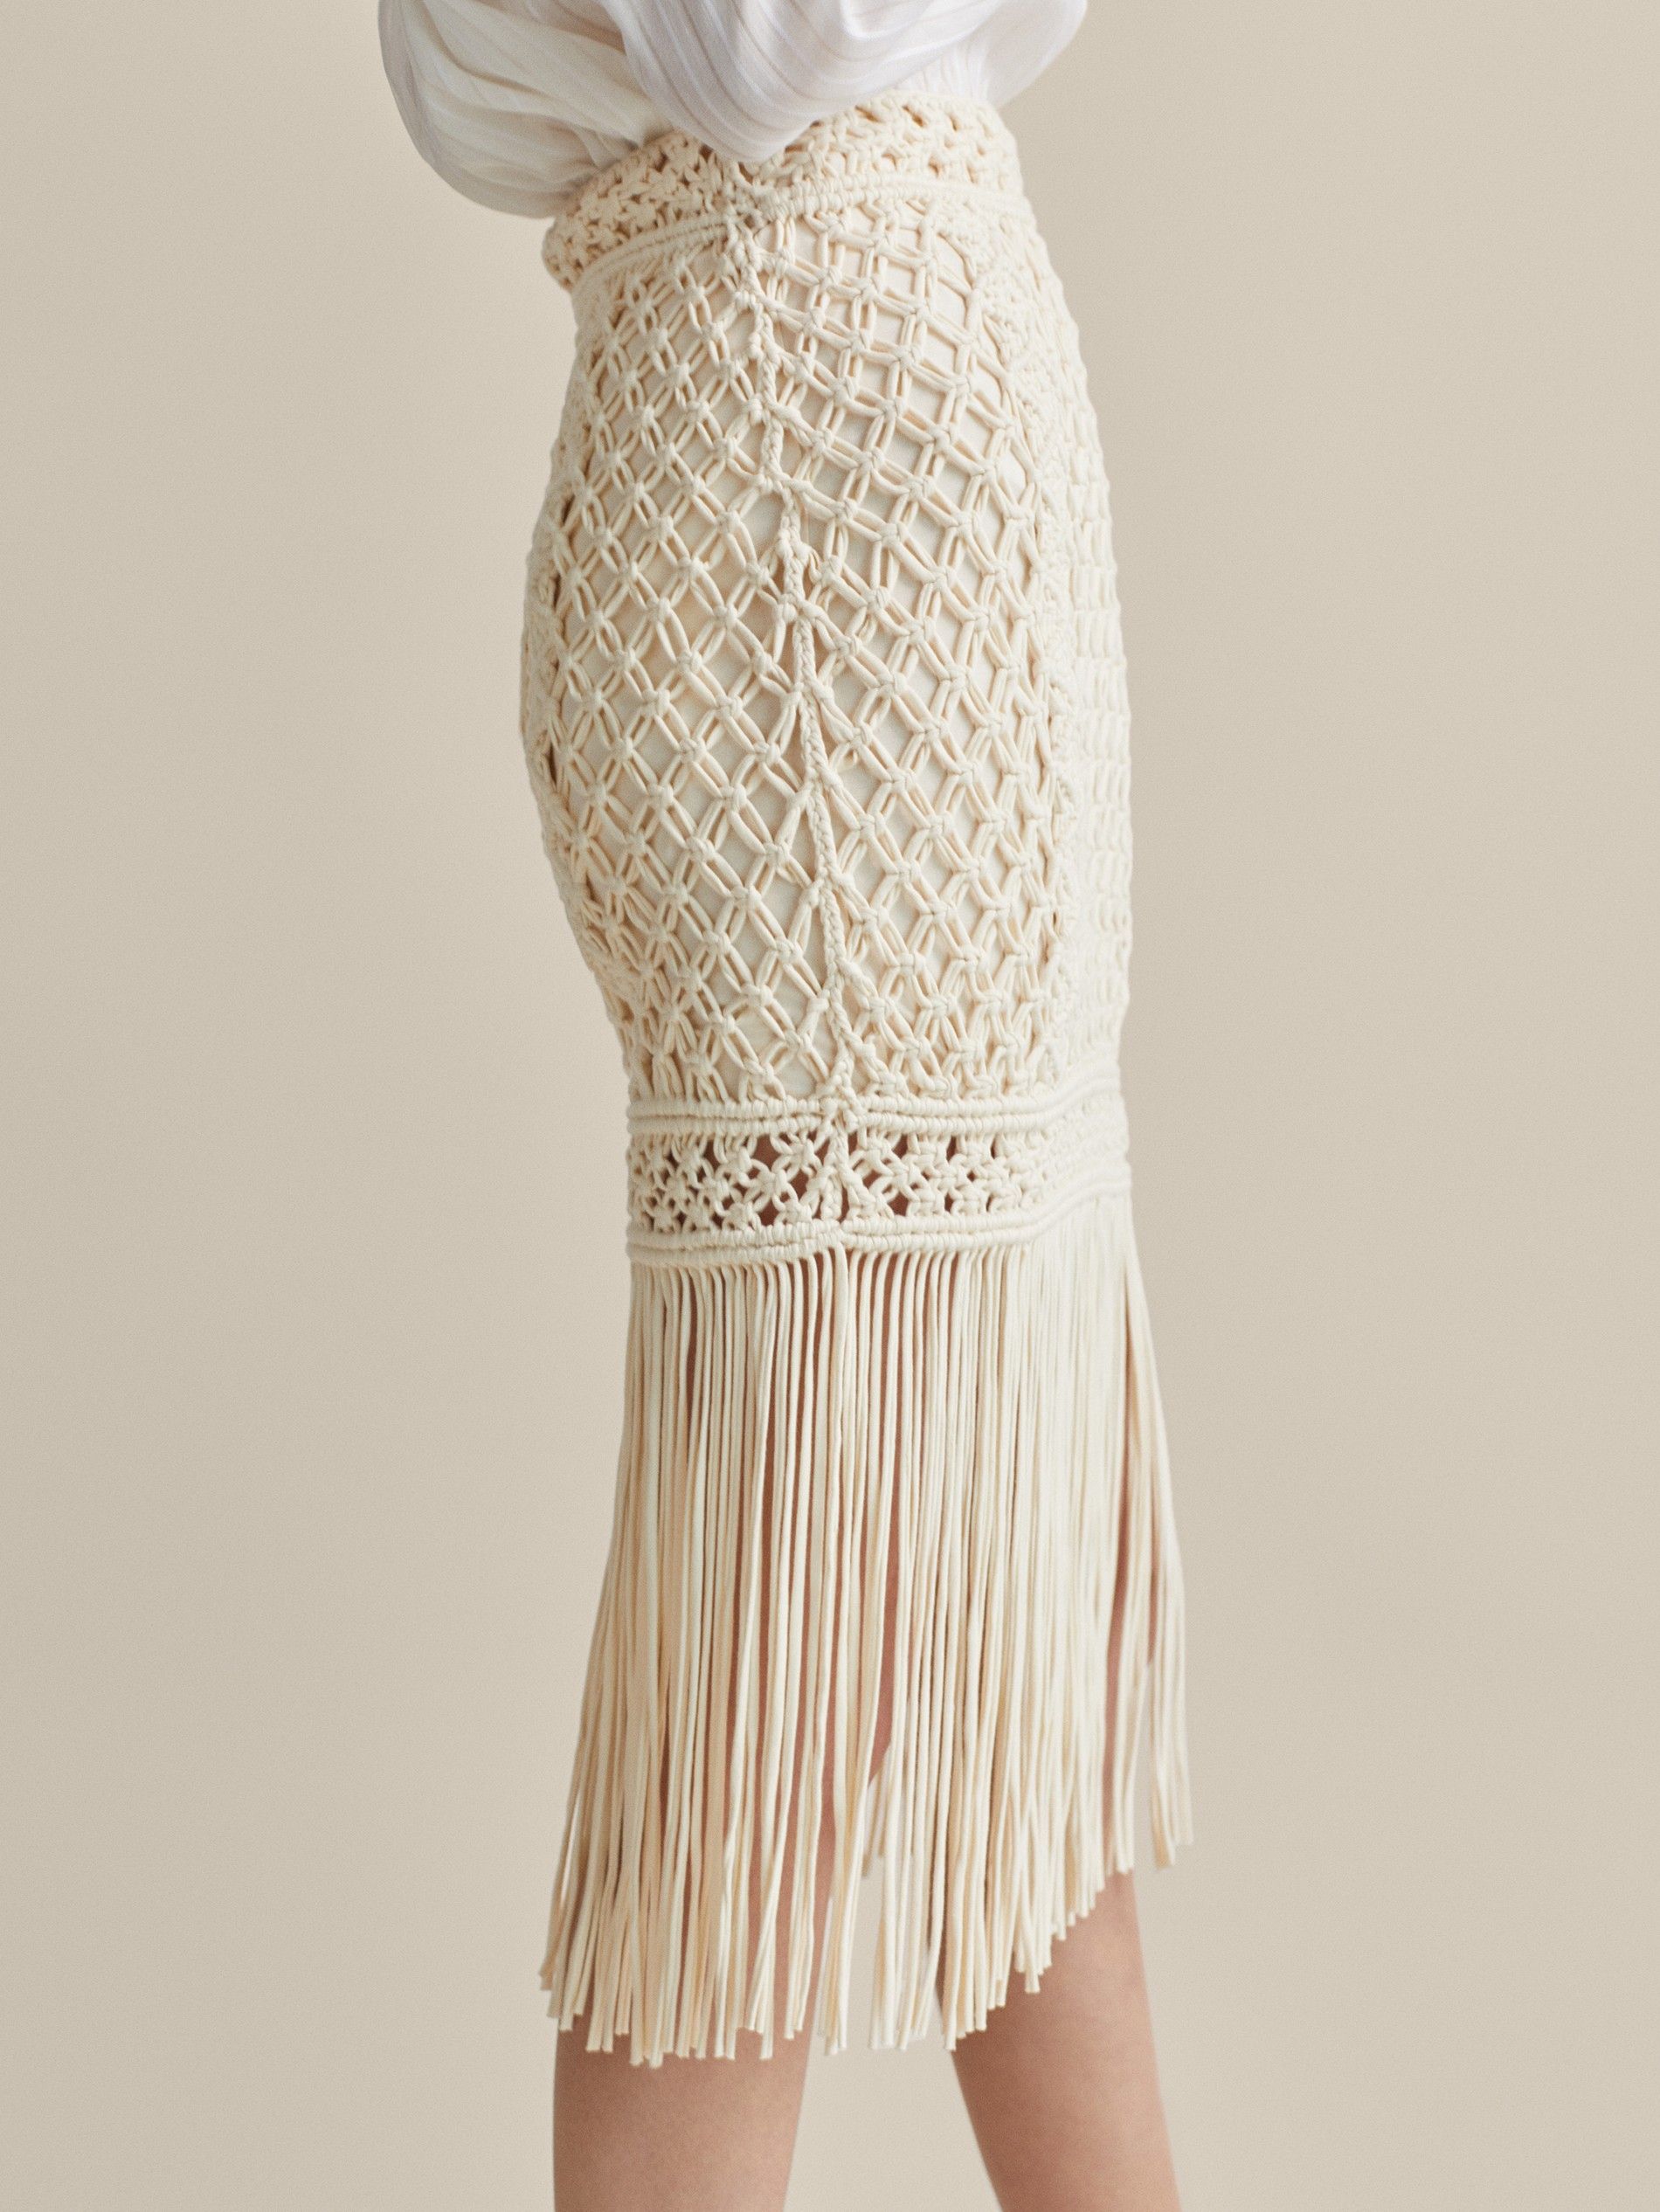 Gobernable enfermero imponer La falda midi de Massimo Dutti de crochet más bonita del mundo